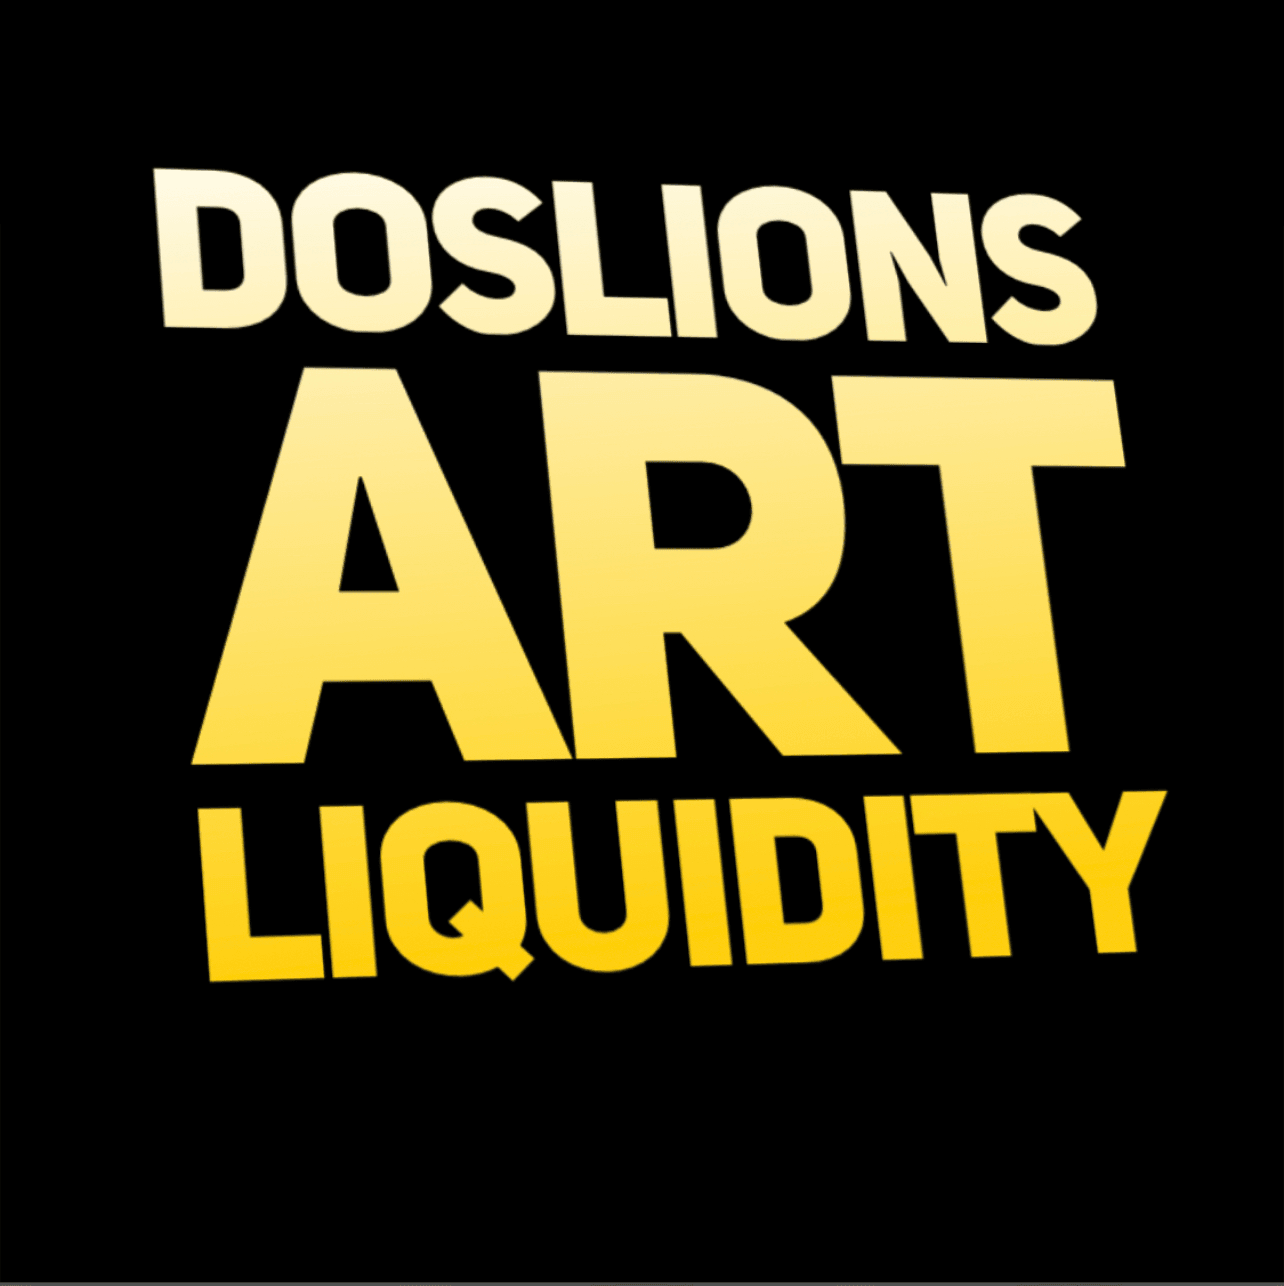 Doslions ART is LIQUIDITY